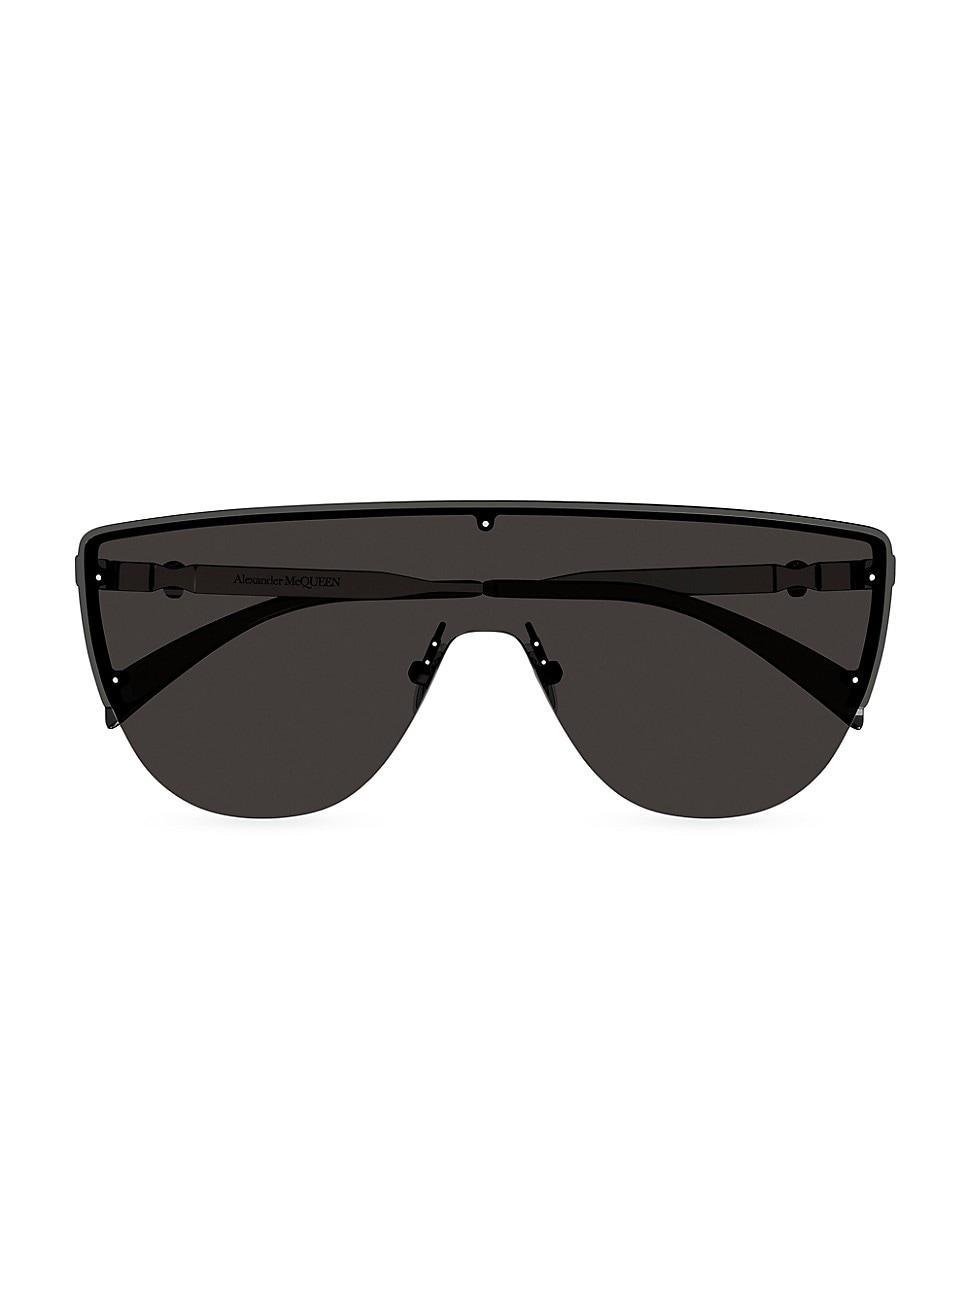 Half-Rimmed Metal Shield Sunglasses Product Image